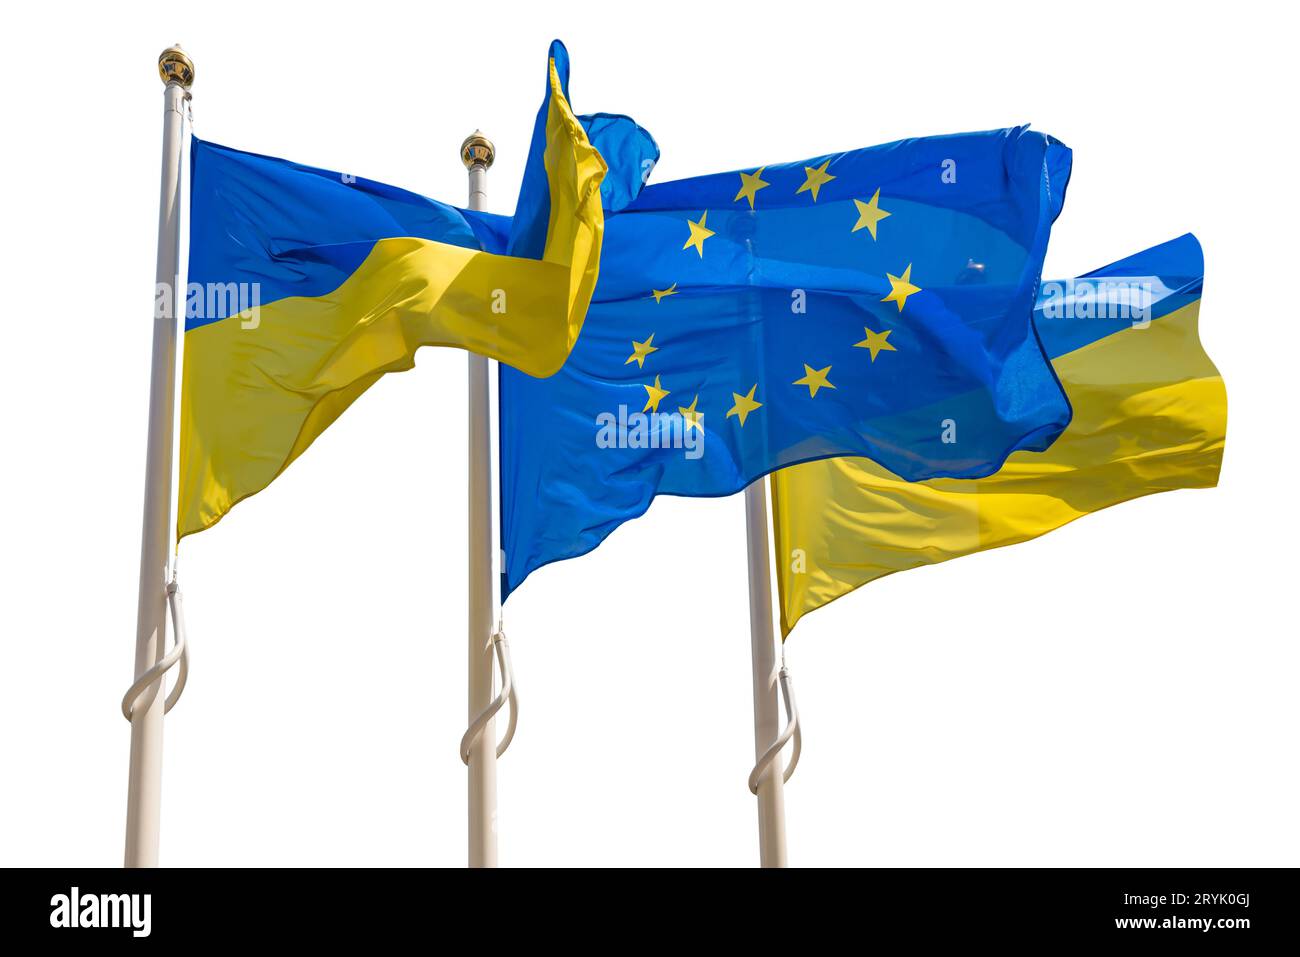 Flagpoles with European Union and Ukraine flags Stock Photo